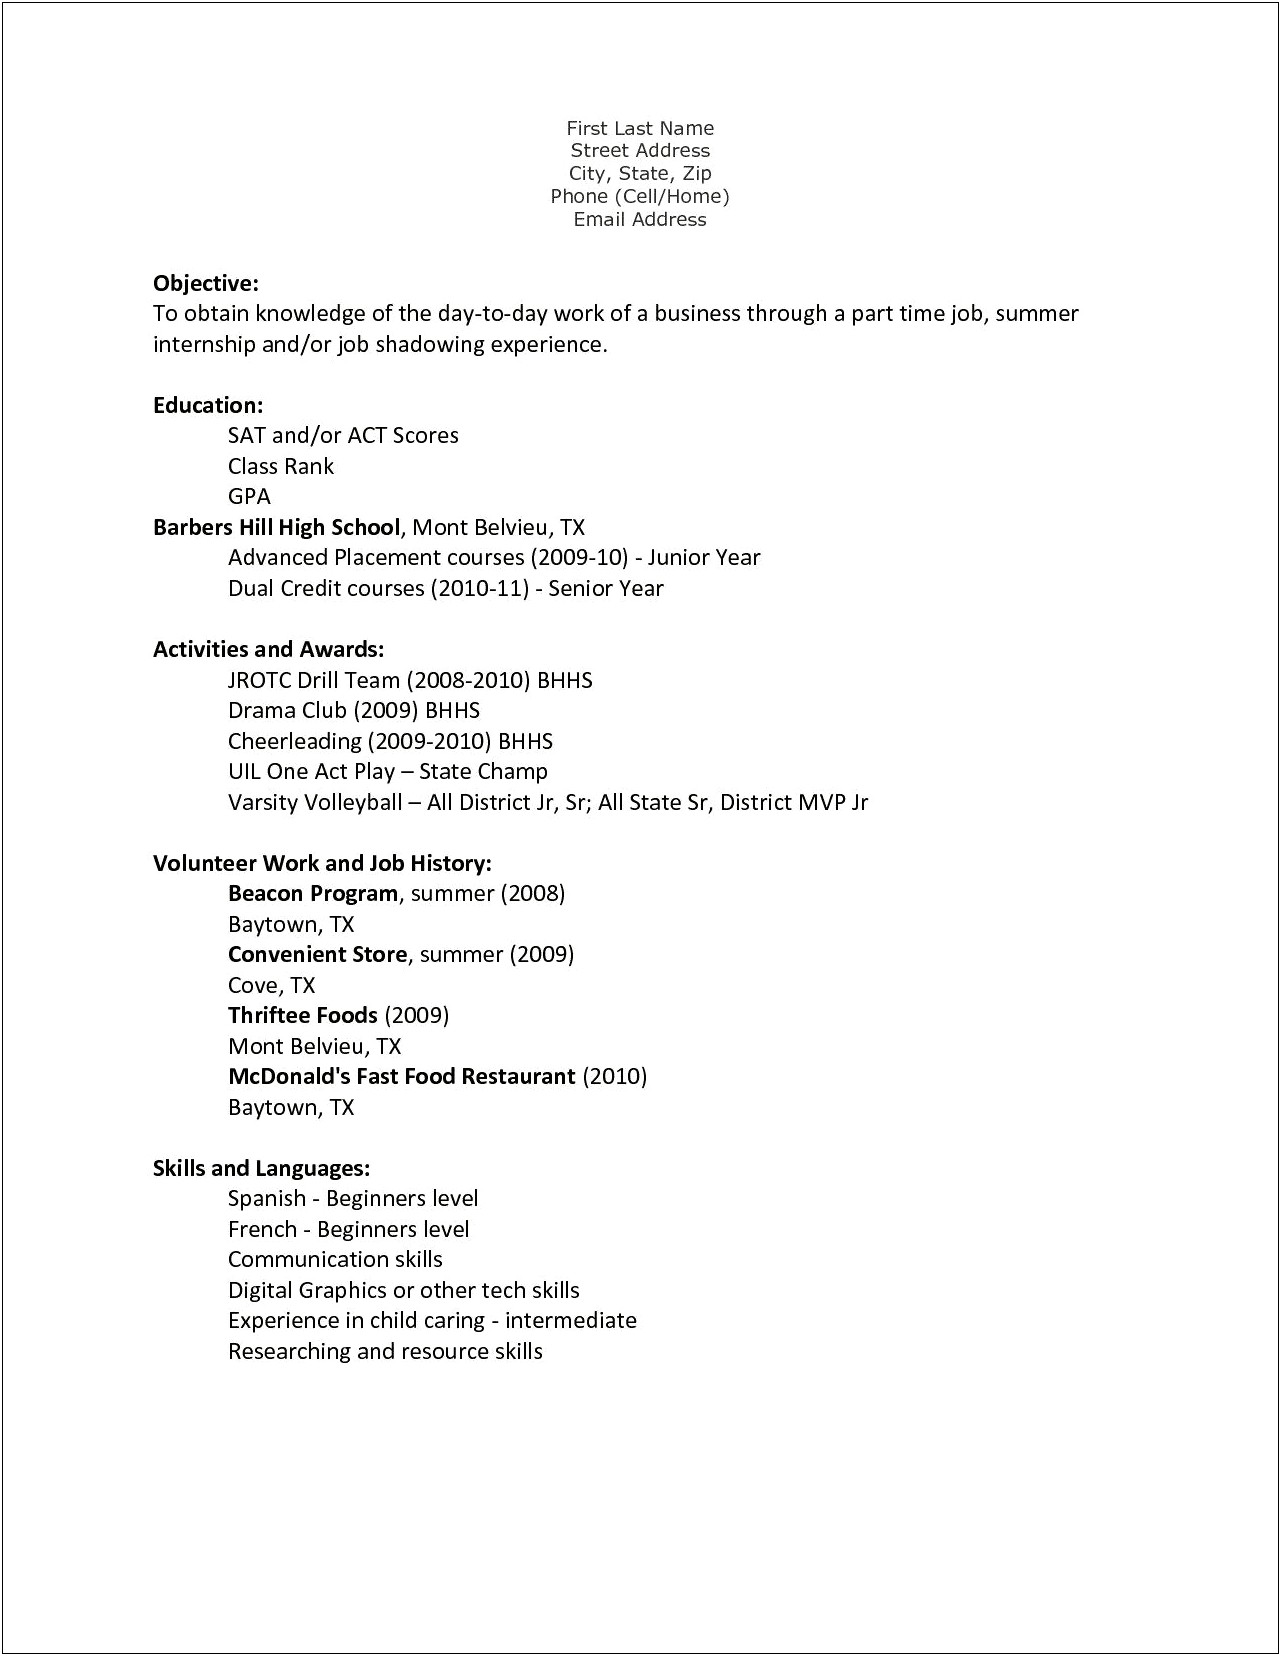 Sample Resume For Jrotc Instructor